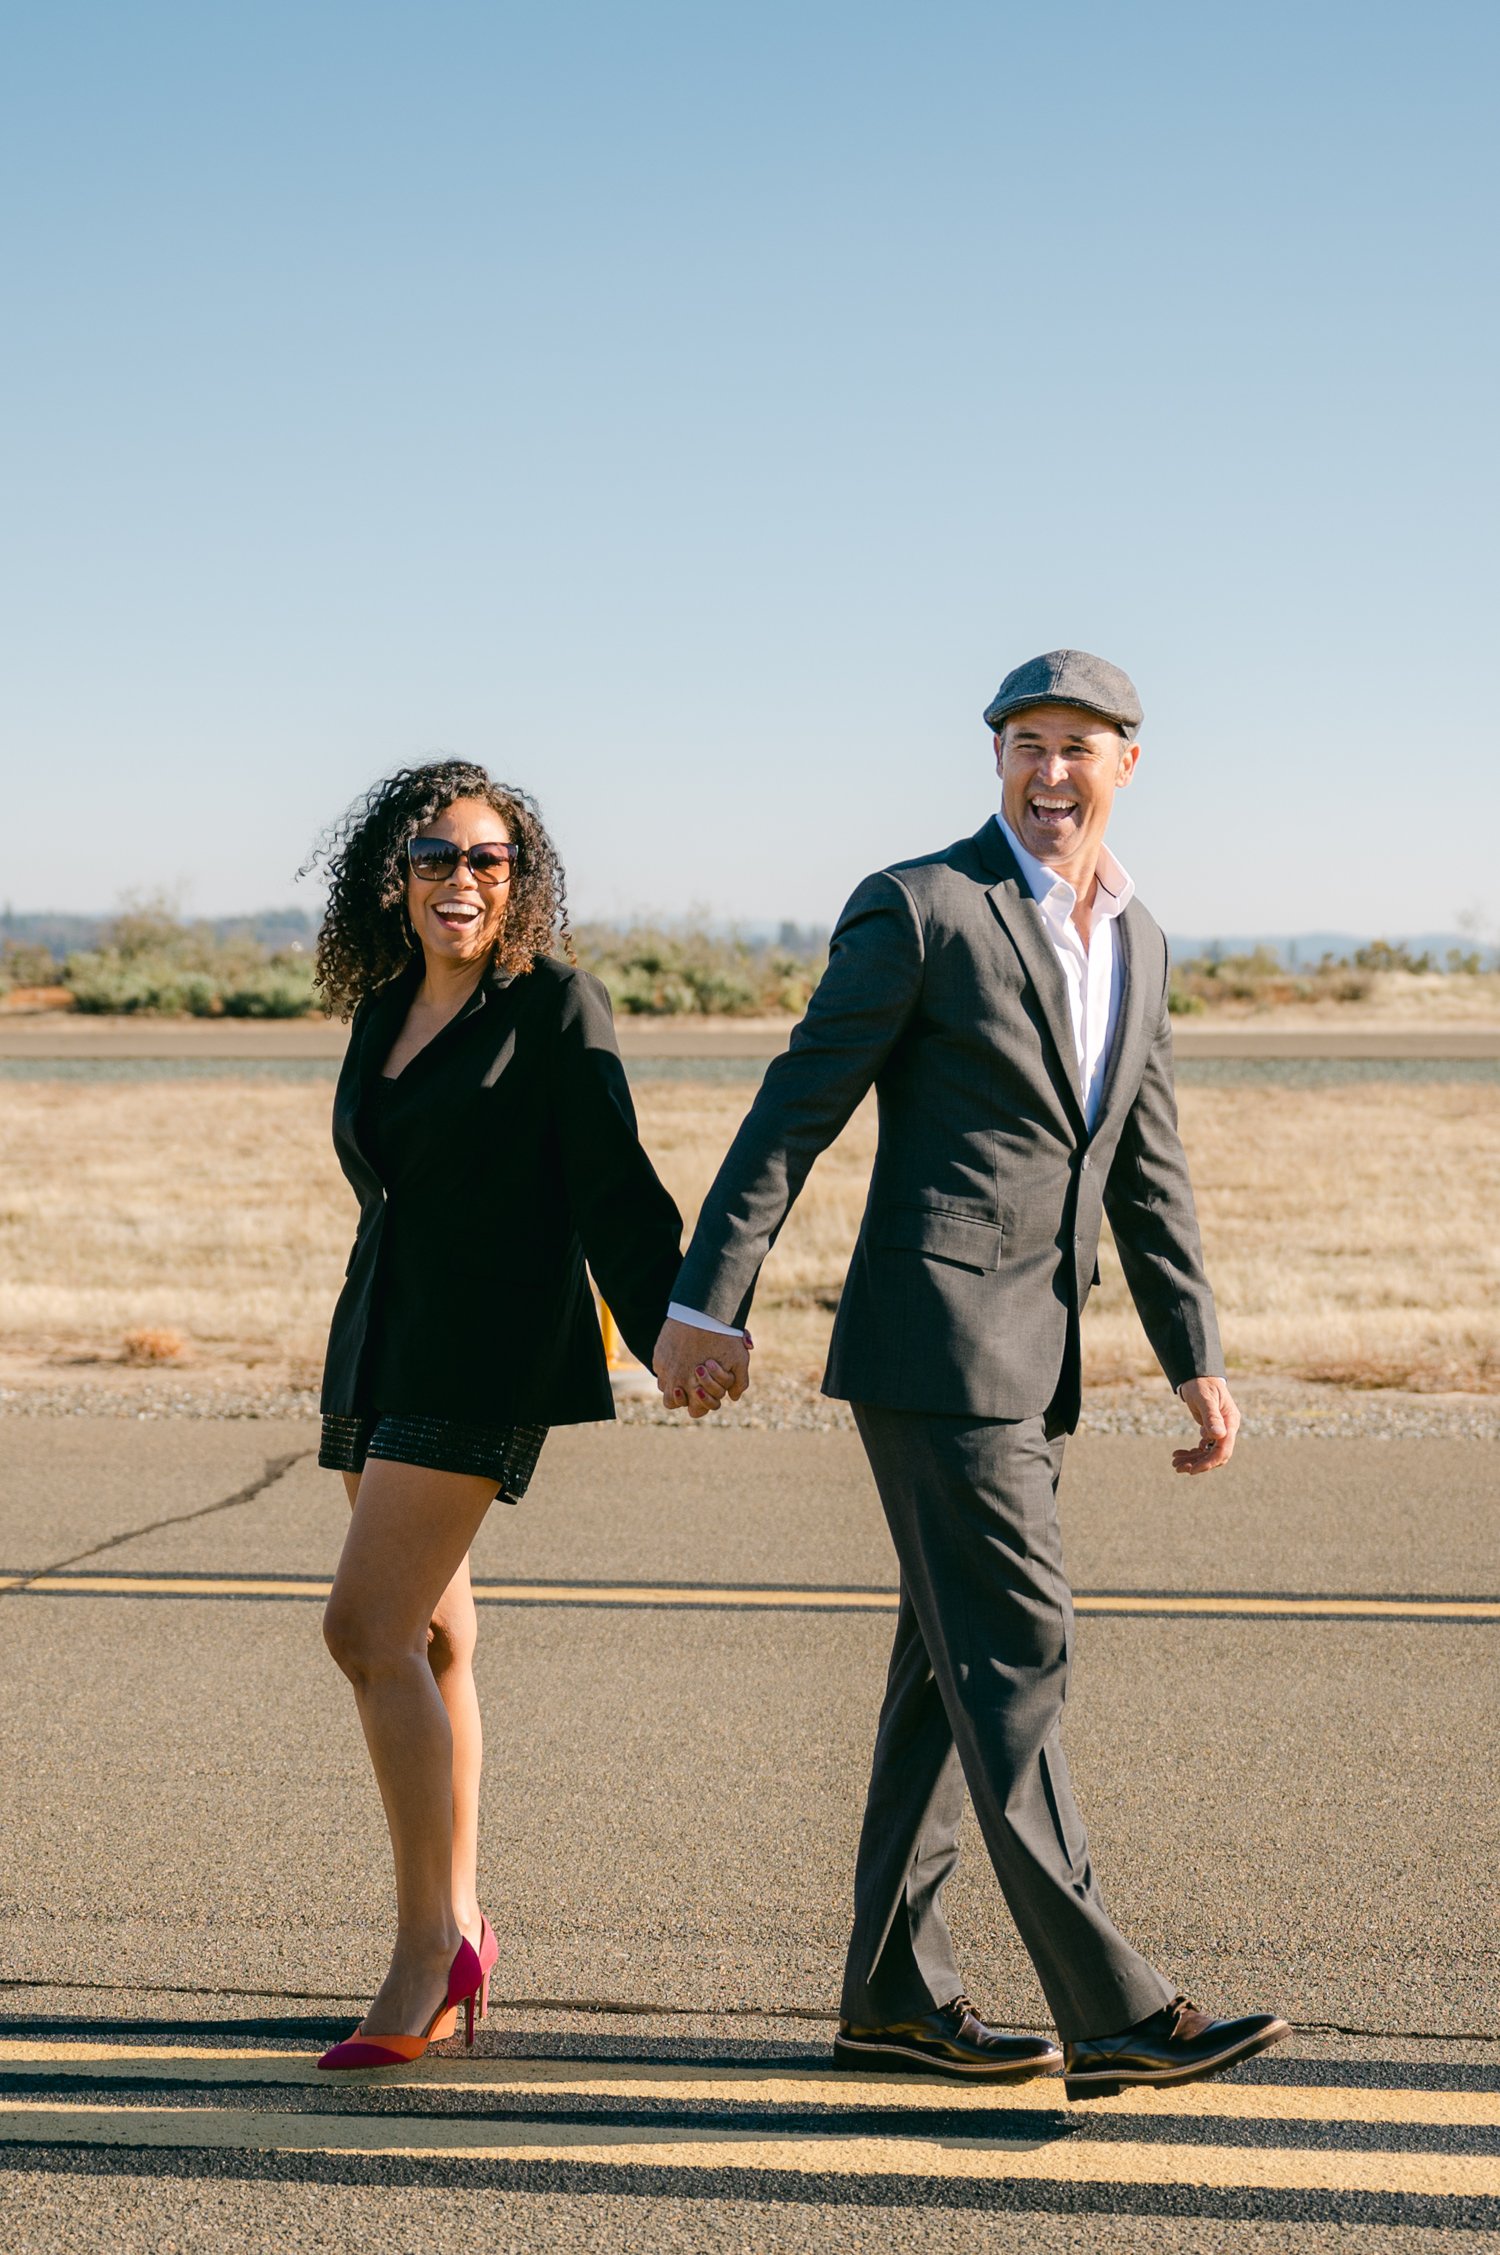 Airport photoshoot, photo of couple walking on airport runway.  